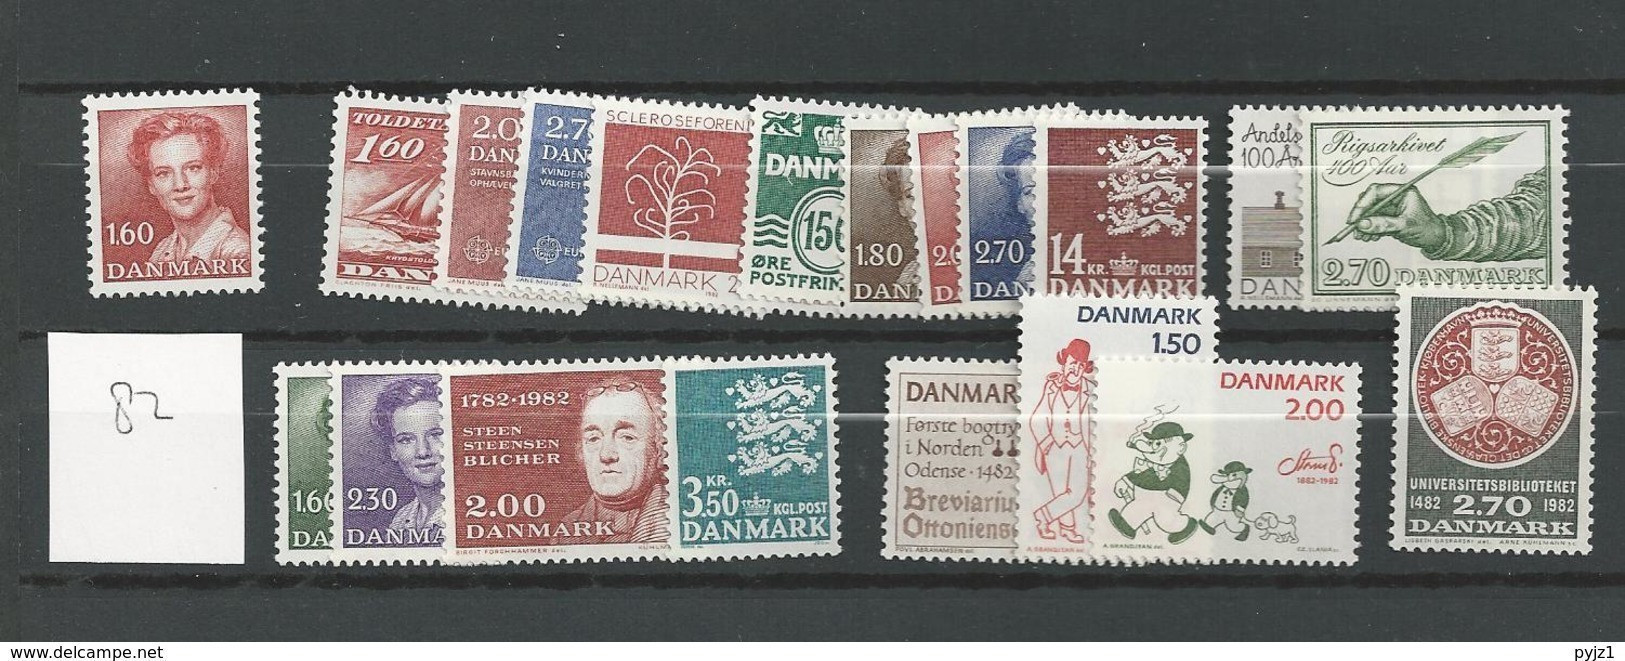 1982 MNH Denmark, Year Complete Postfris** - Volledig Jaar